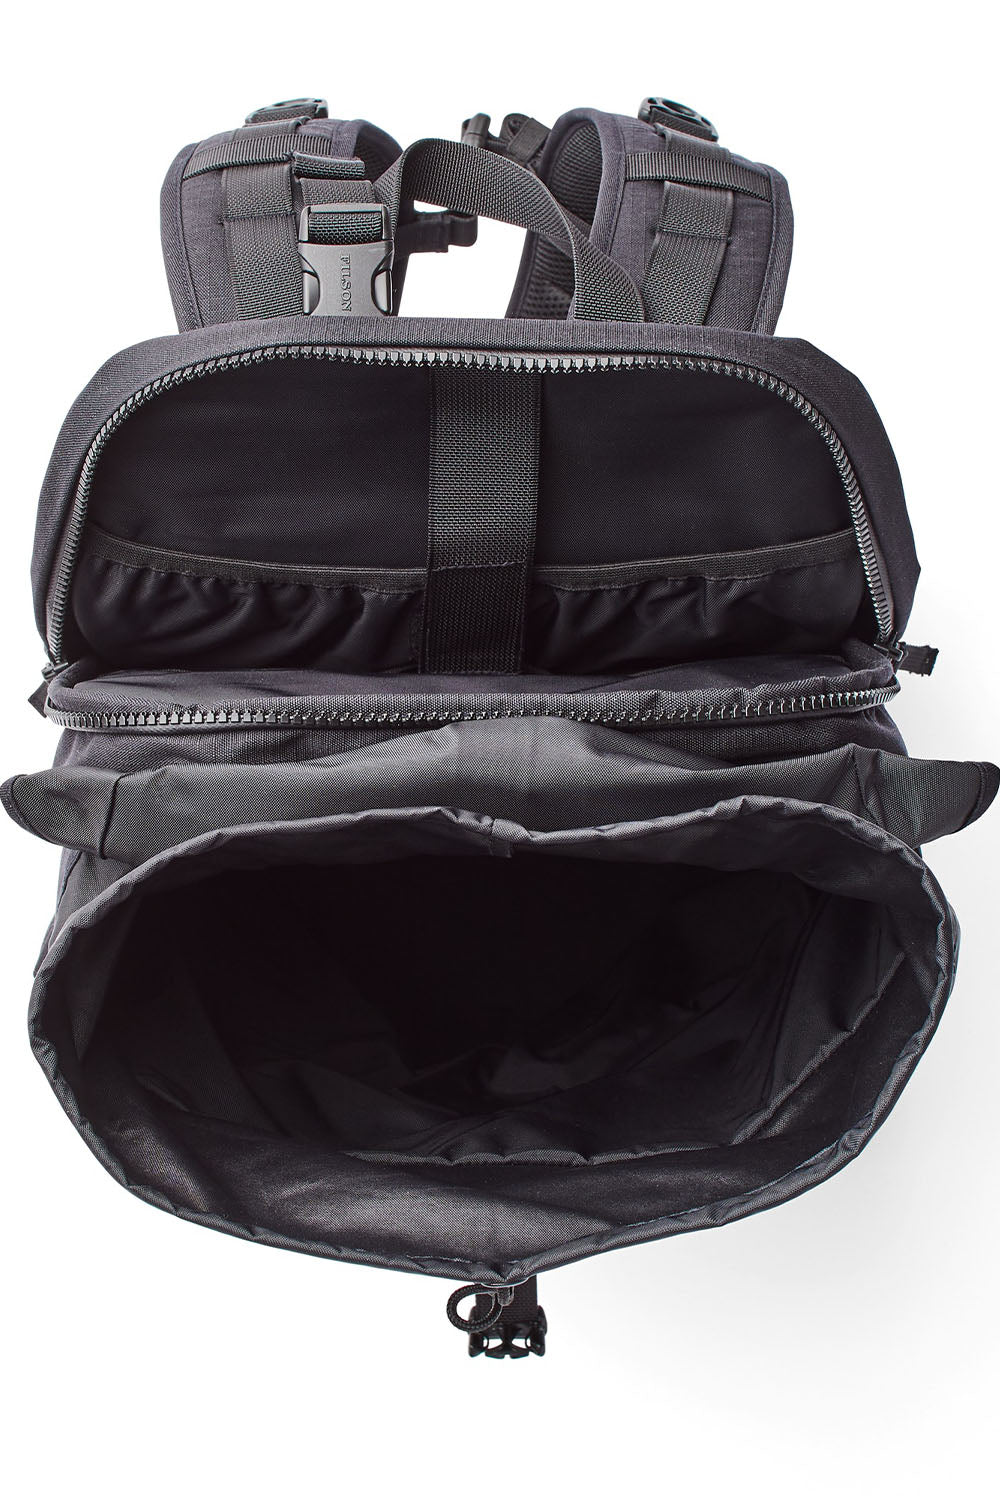 Filson Ripstop Cordura Nylon 35L Backpack (Black)